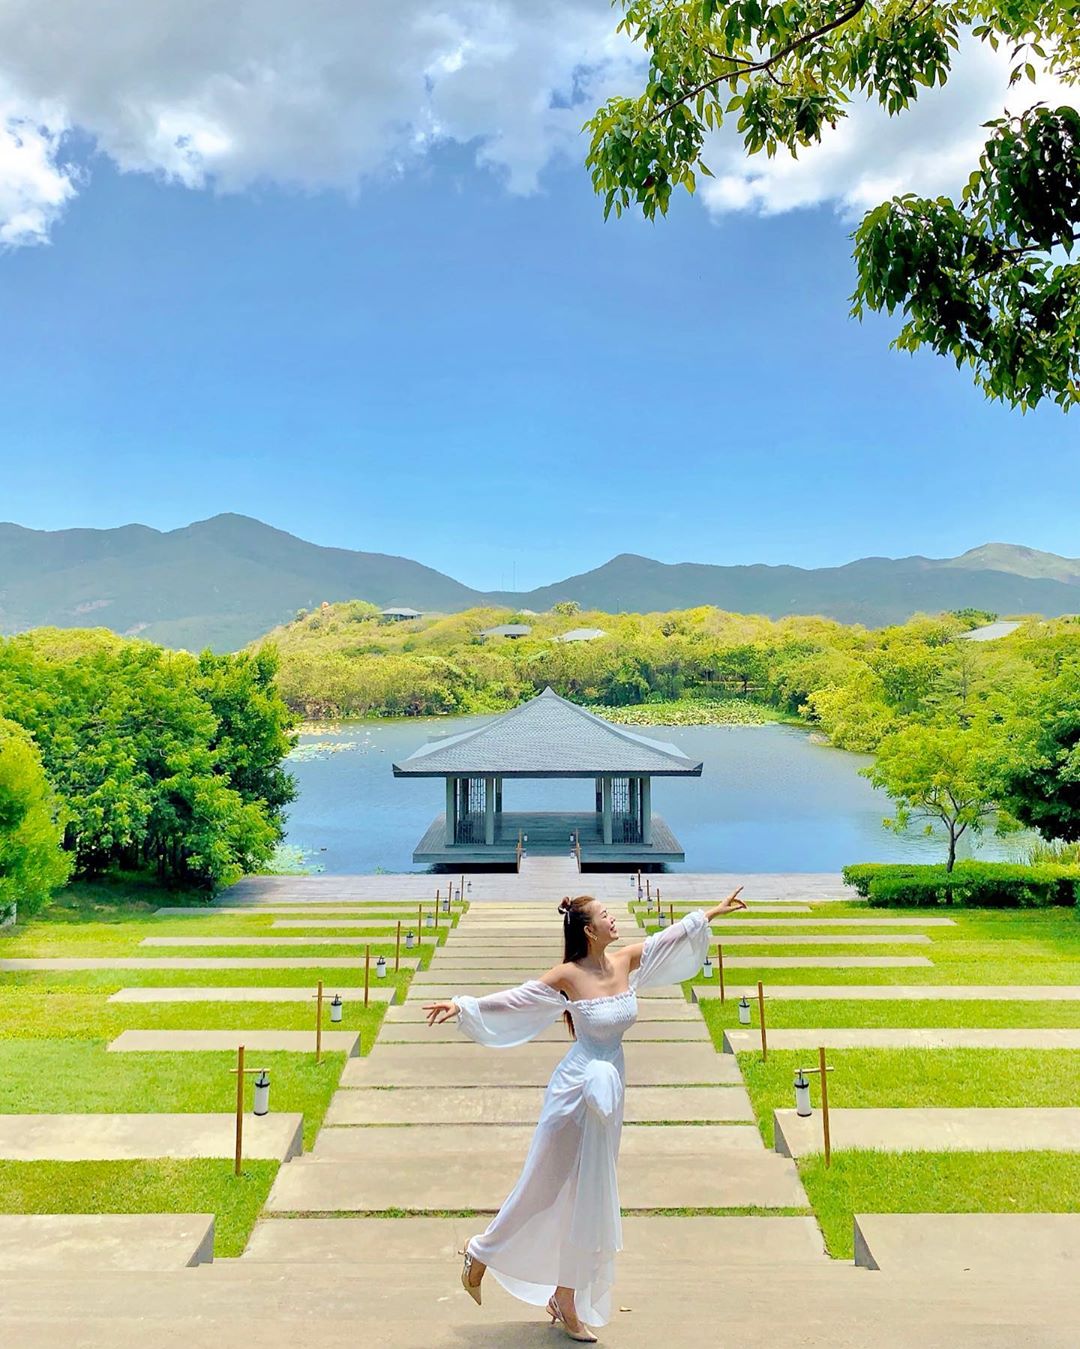 amanoi ninh thuan resort, vietnam – enjoy a wonderful vacation in the foreground